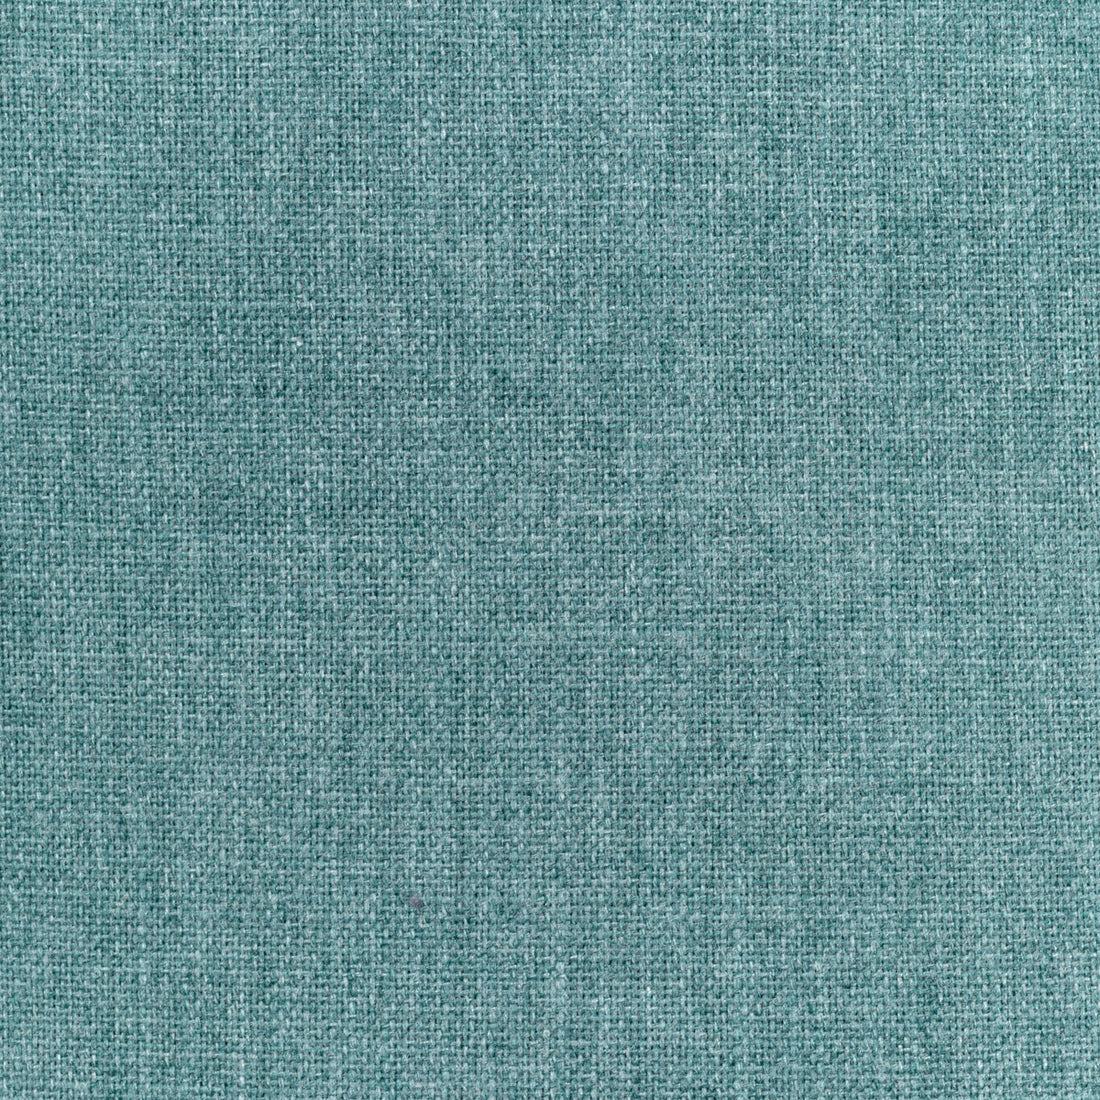 Kravet Smart fabric in 36112-1516 color - pattern 36112.1516.0 - by Kravet Smart in the Performance Kravetarmor collection